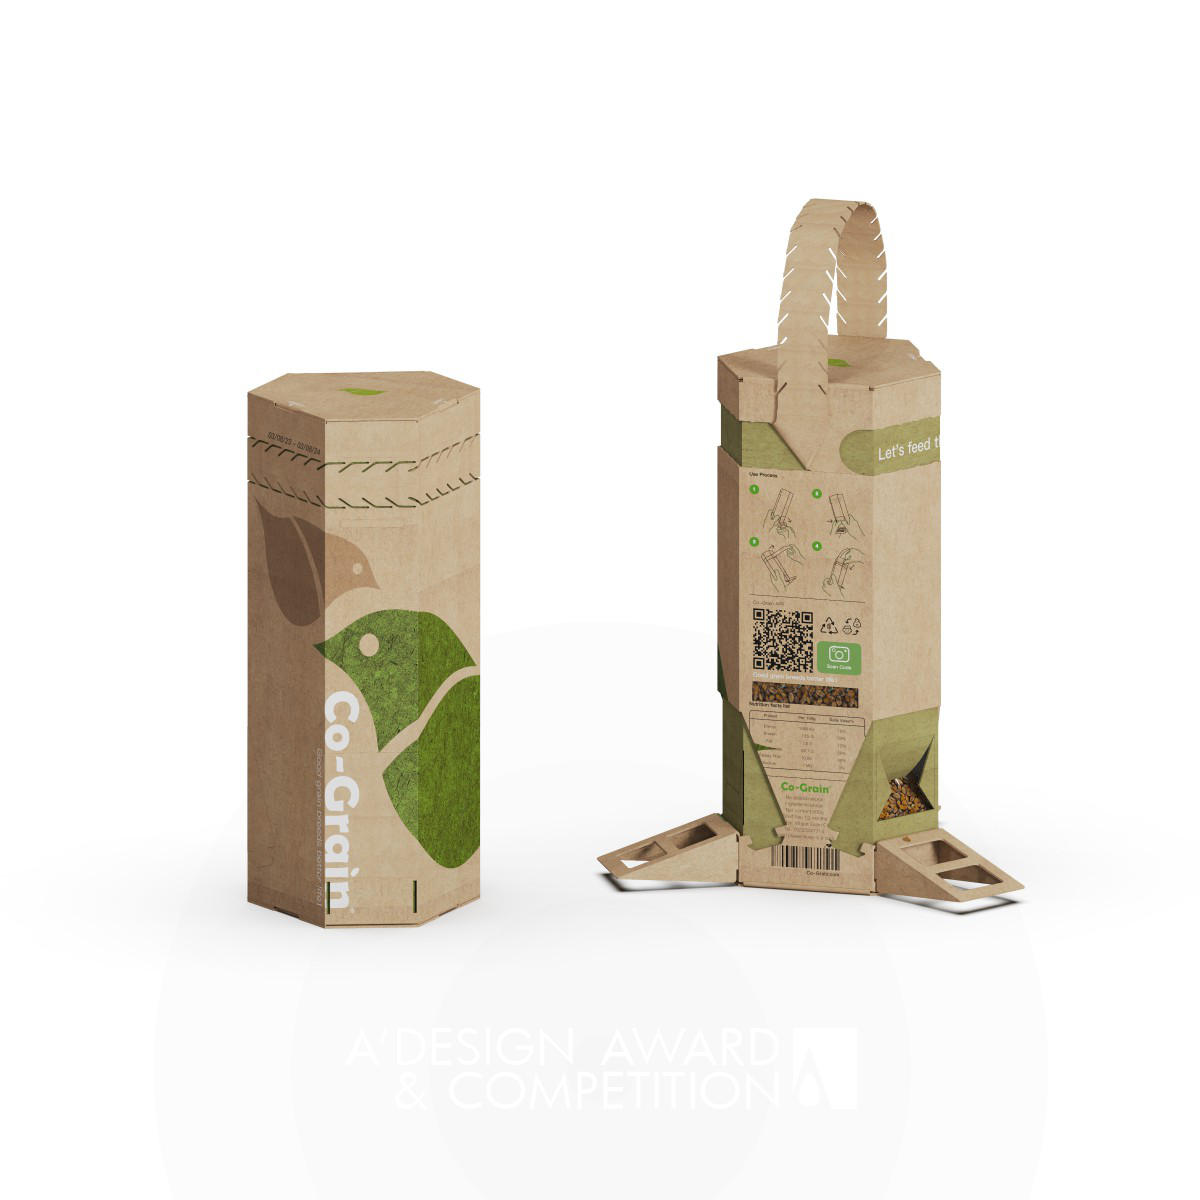 Co-Grain: Transforming Cereal Packaging into Bird Feeders